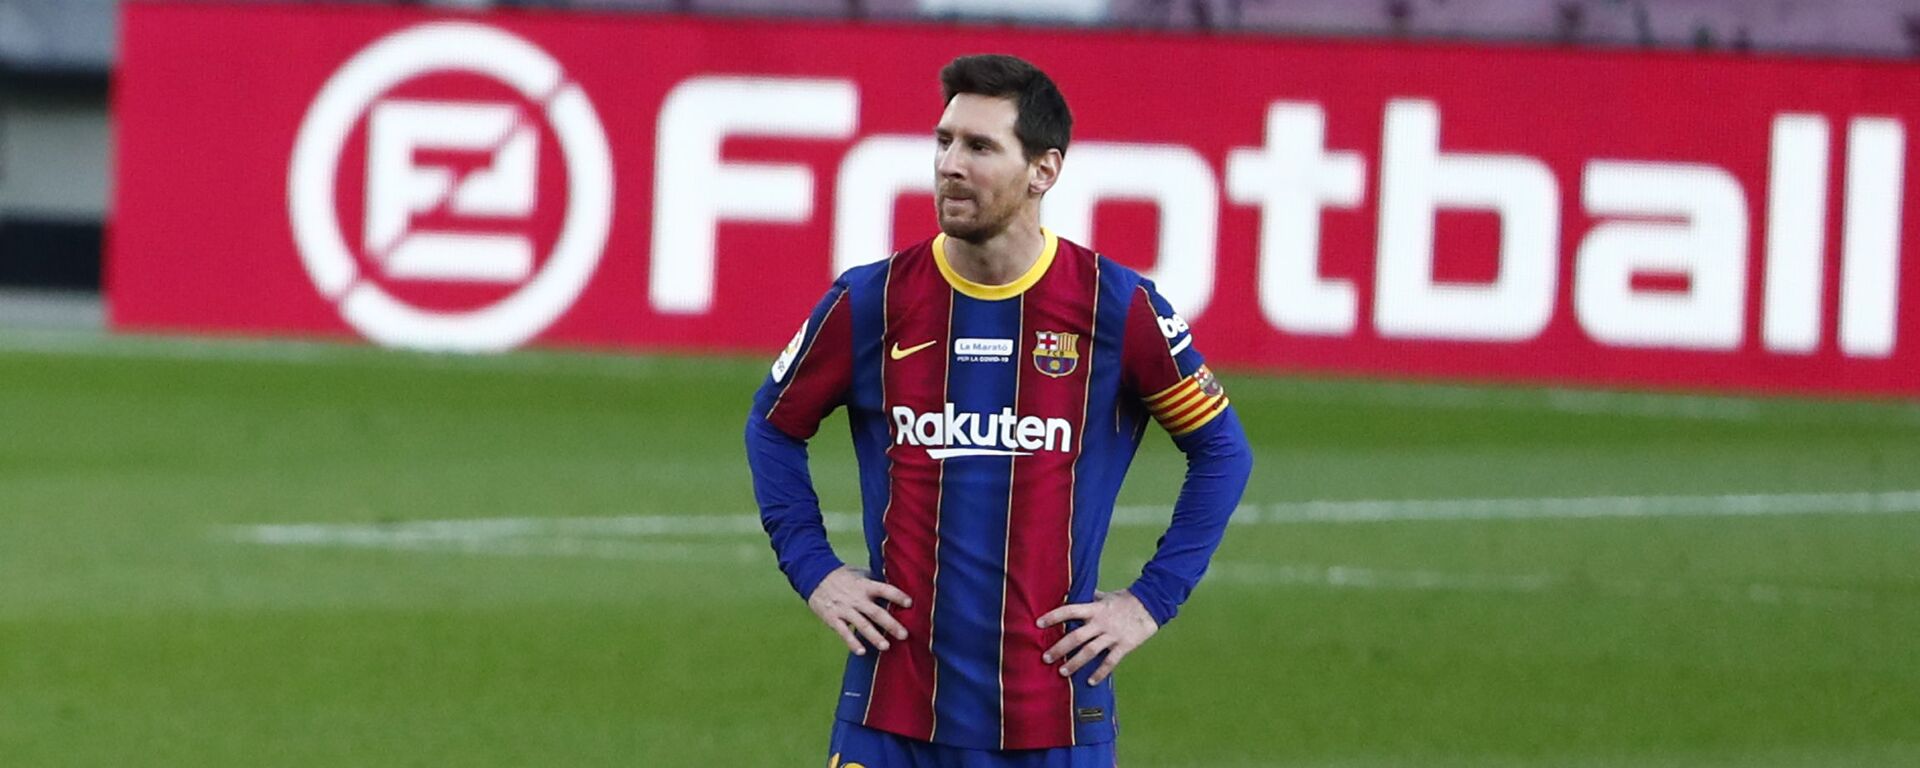 Leo Messi, futbolista argentino - Sputnik Mundo, 1920, 31.01.2021